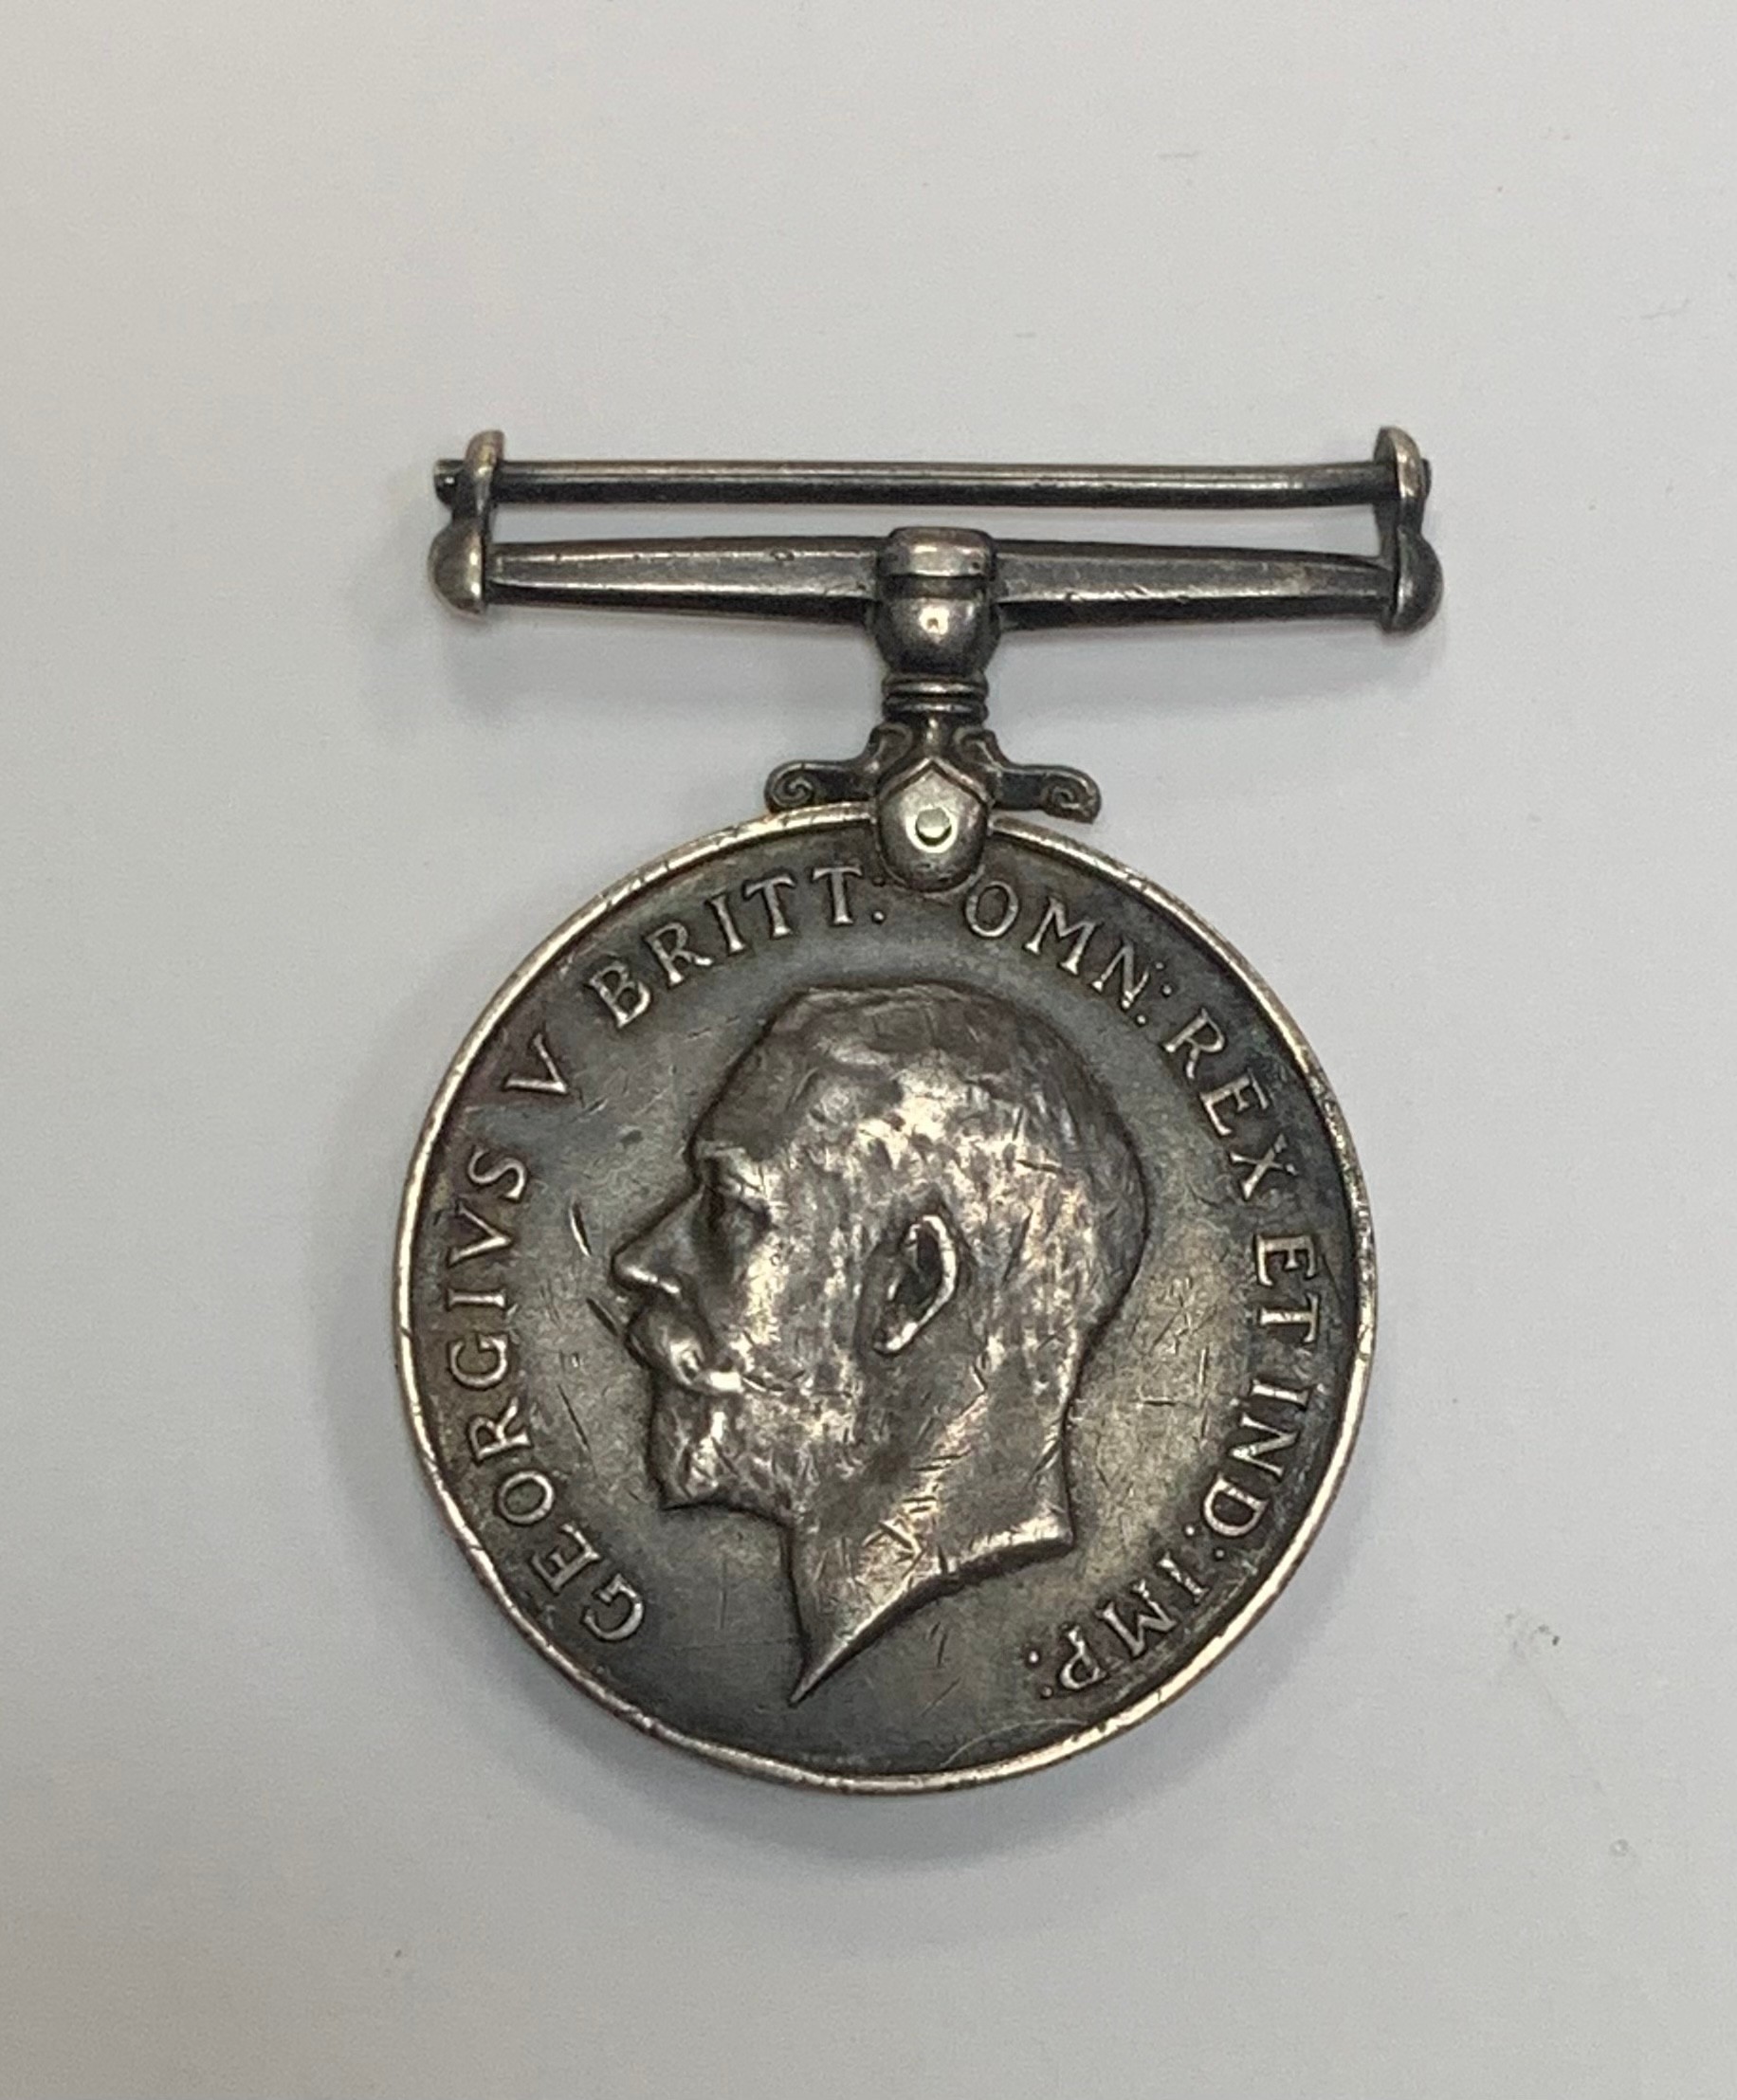 First World War – British War Medal awarded to 42549 PTE A. BIRTWISTLE LAN FUS